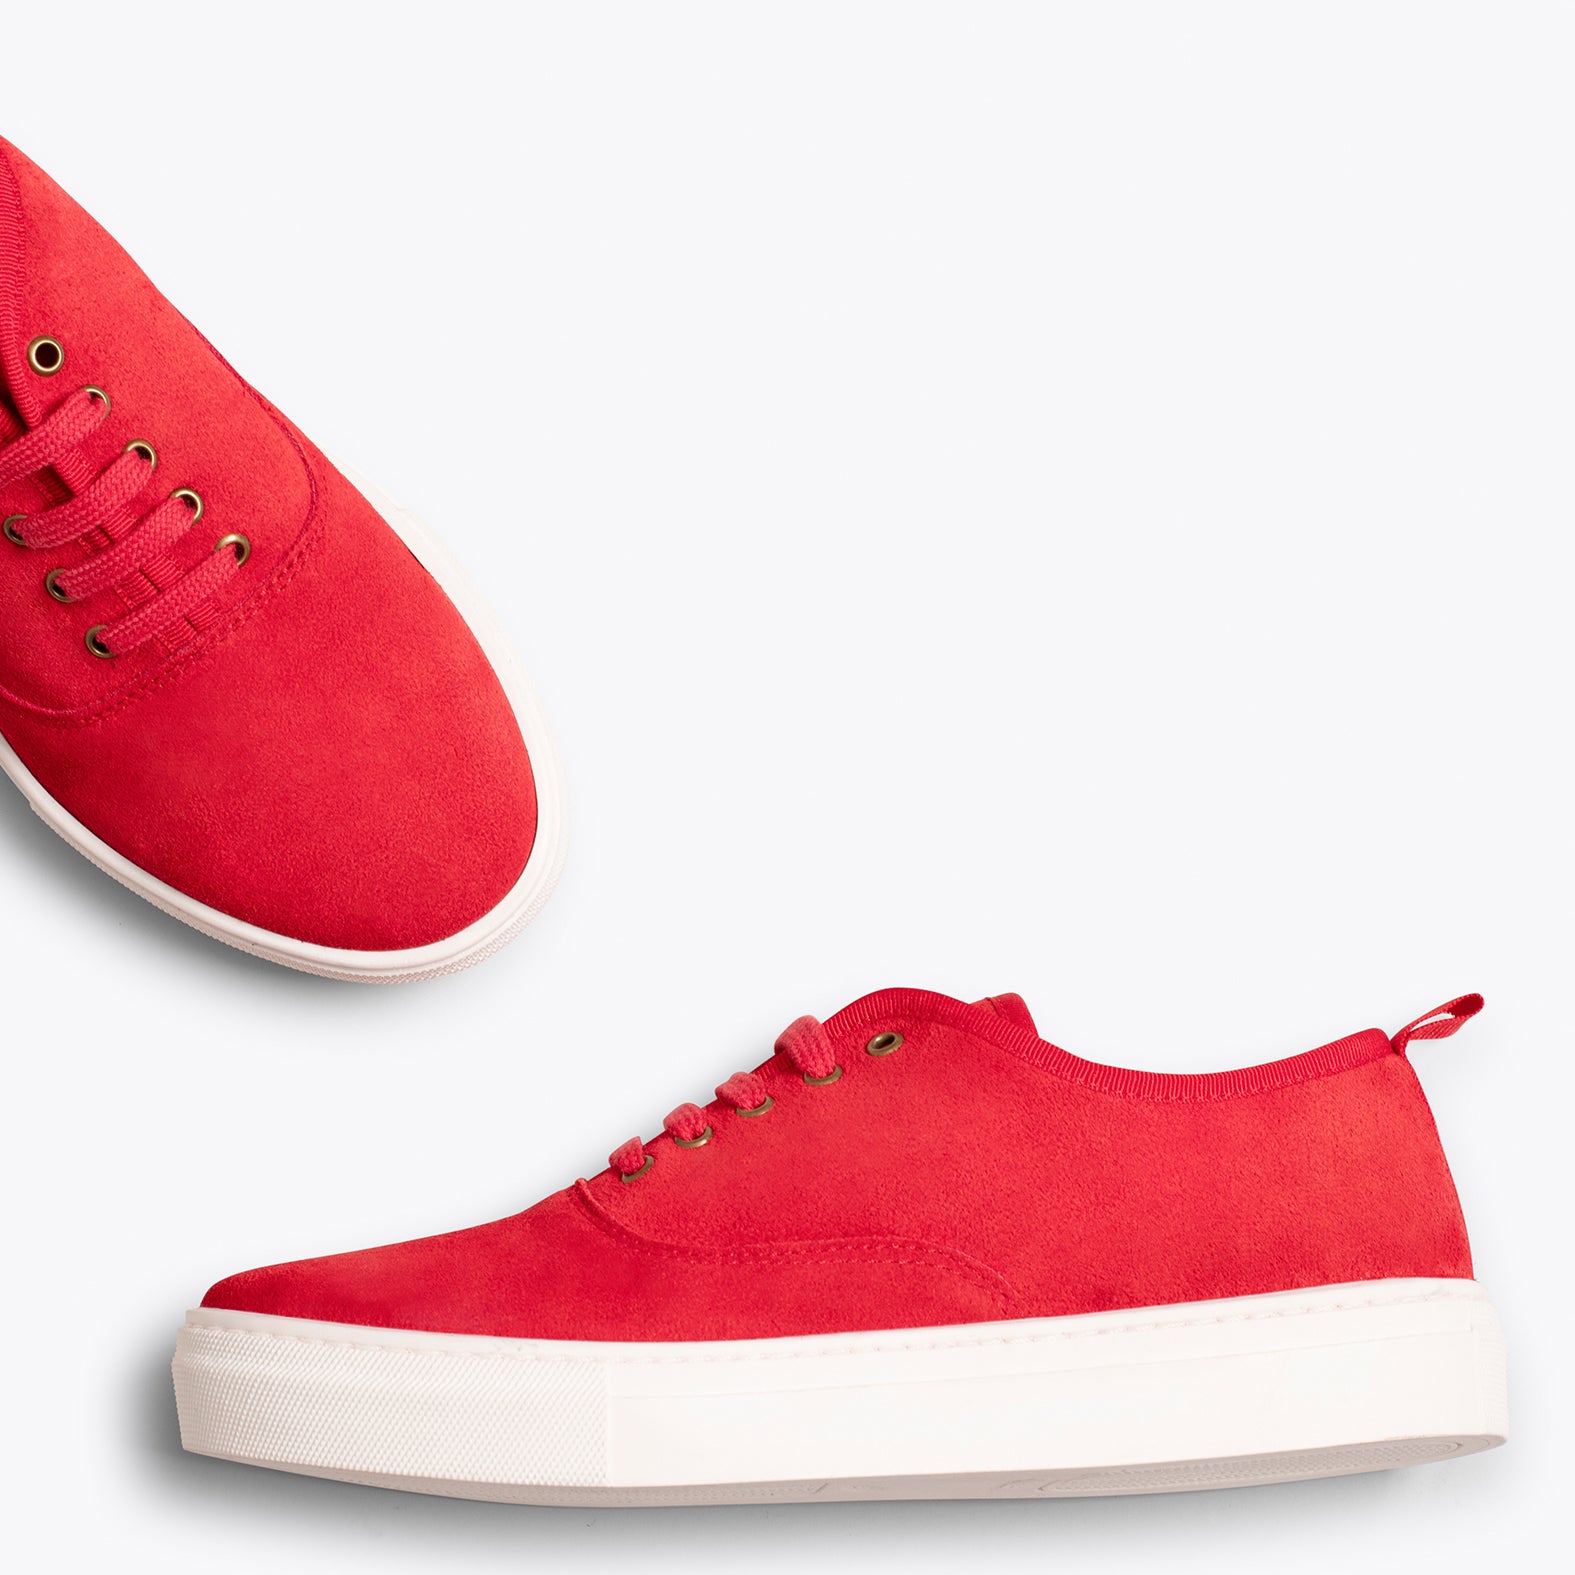 WANDER – RED suede sneaker with platform